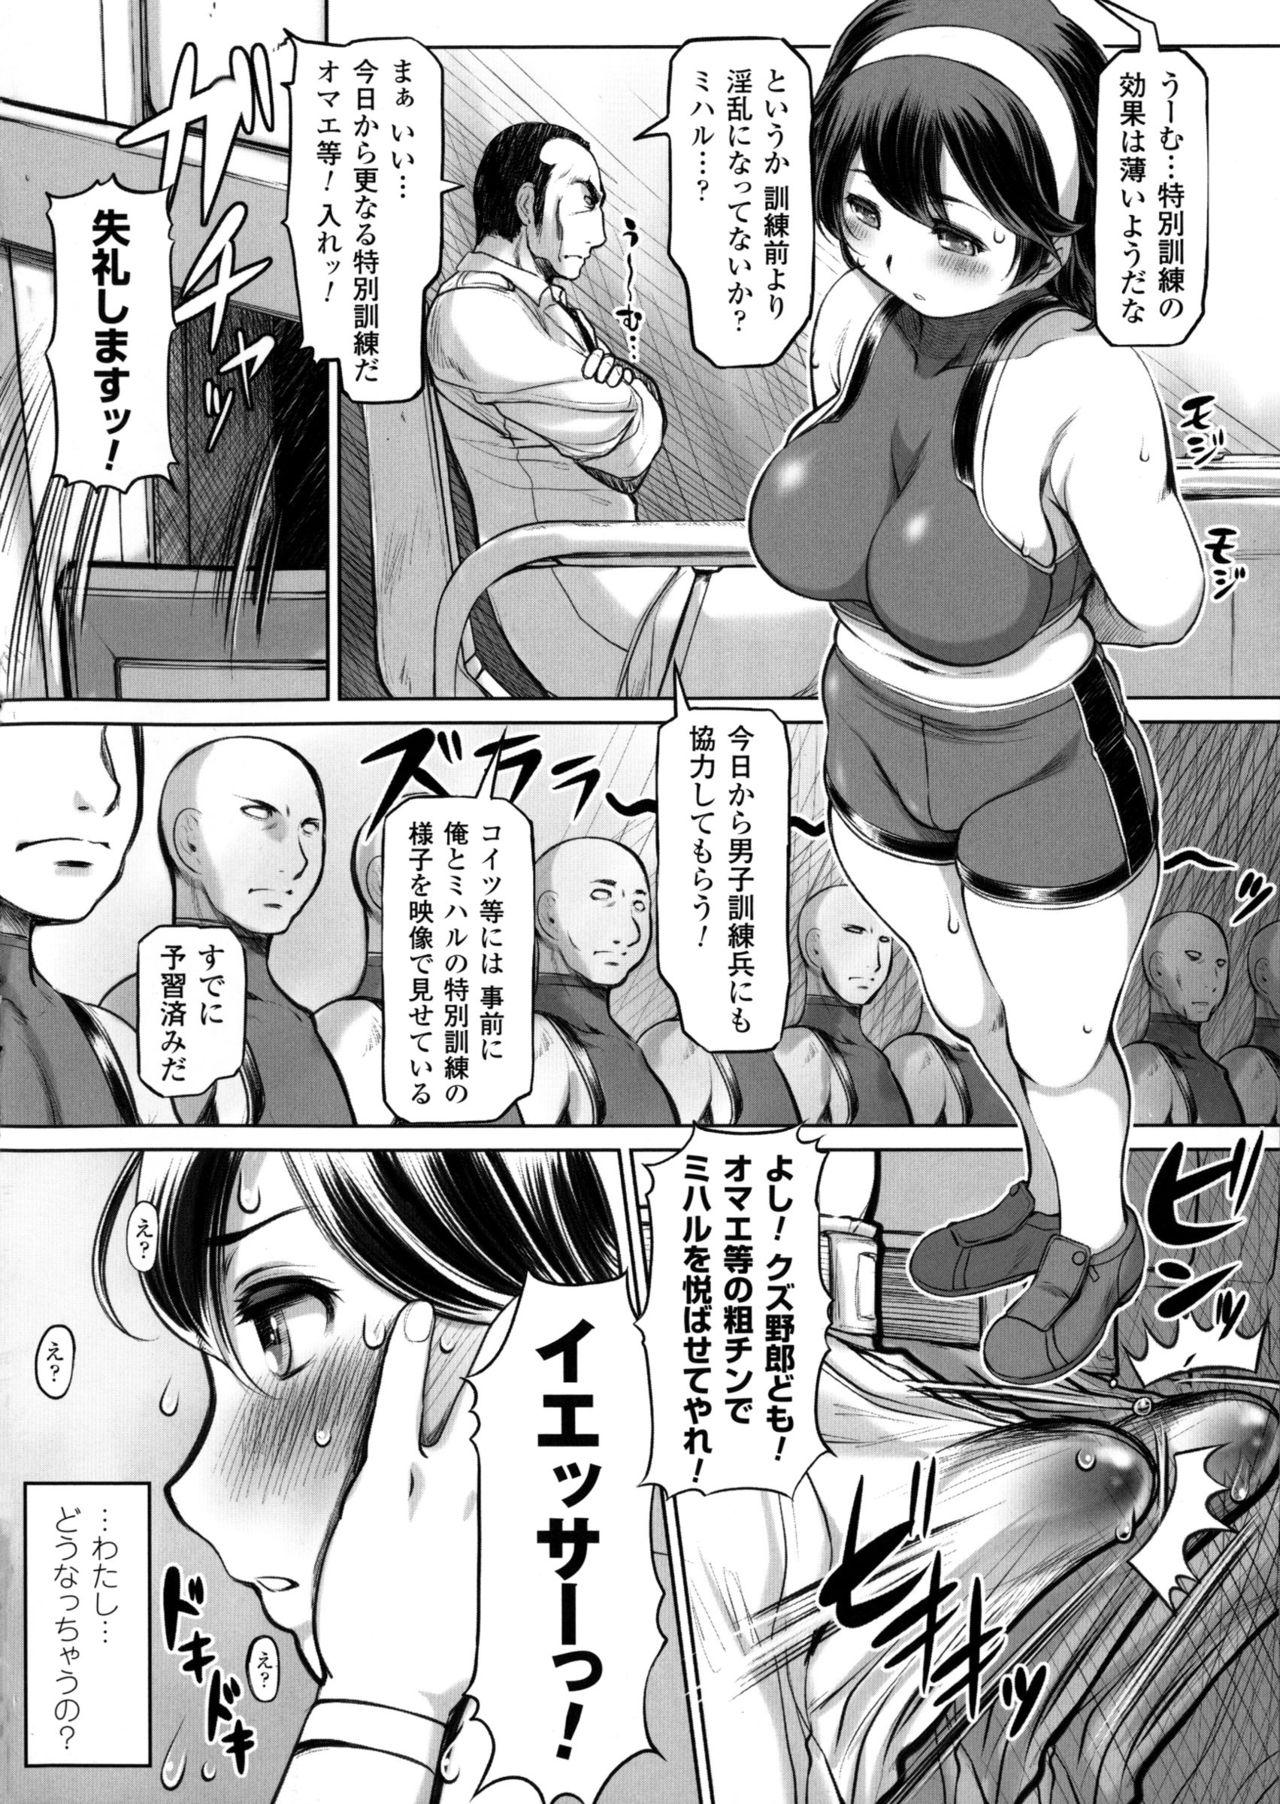 2D Comic Magazine Military Girls Sex Boot Camp e Youkoso! 132